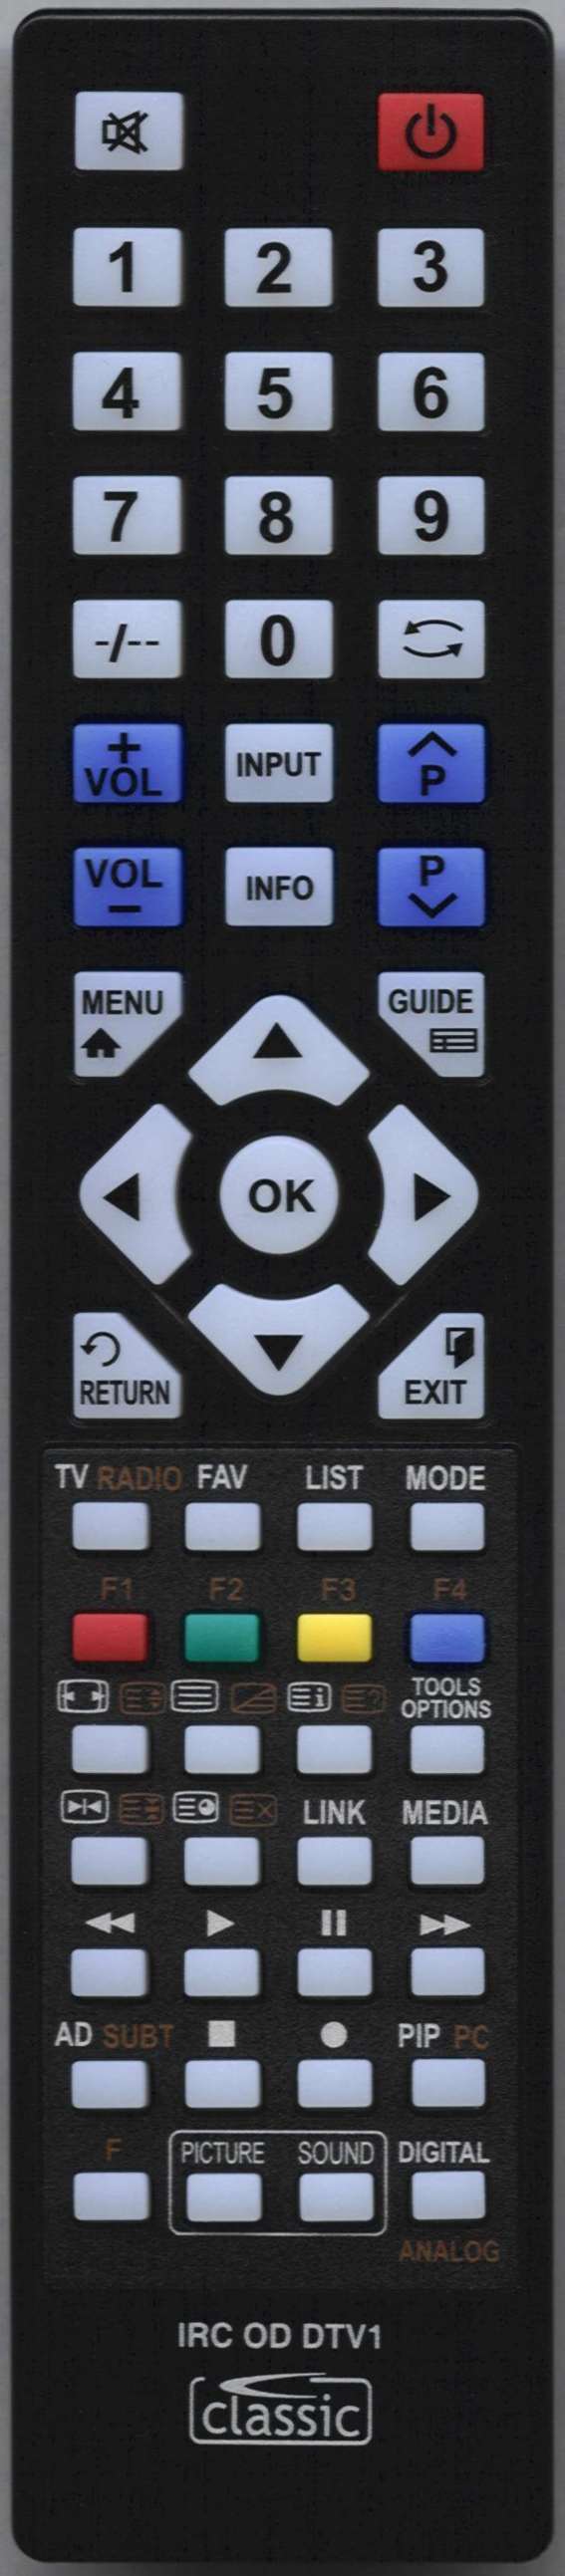 Sony KDL-40X3000 Remote Control Alternative